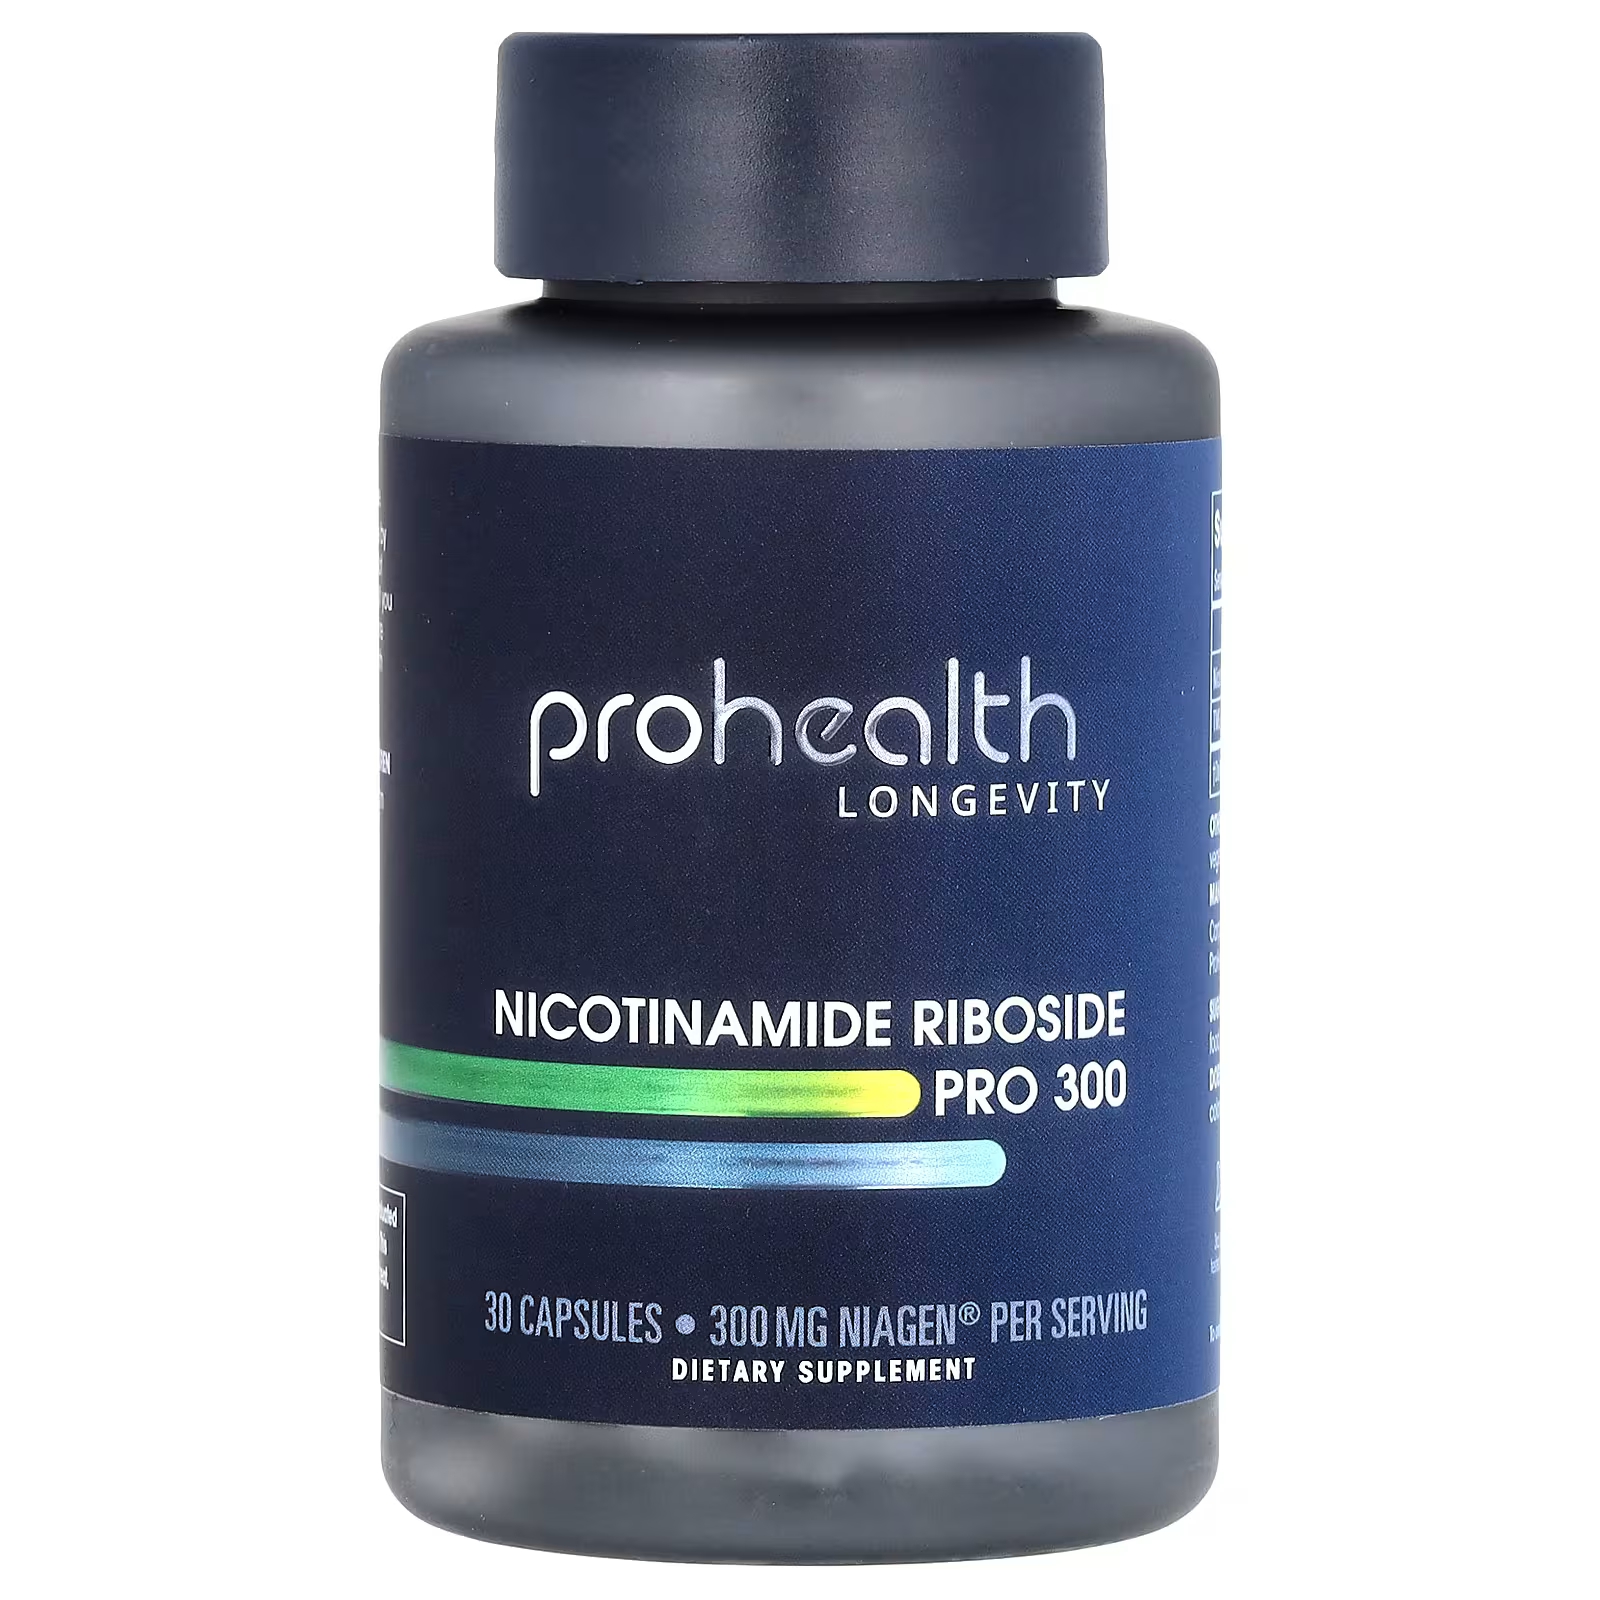 Пищевая добавка ProHealth Longevity Никотинамид рибозид Pro 300, 300 мг